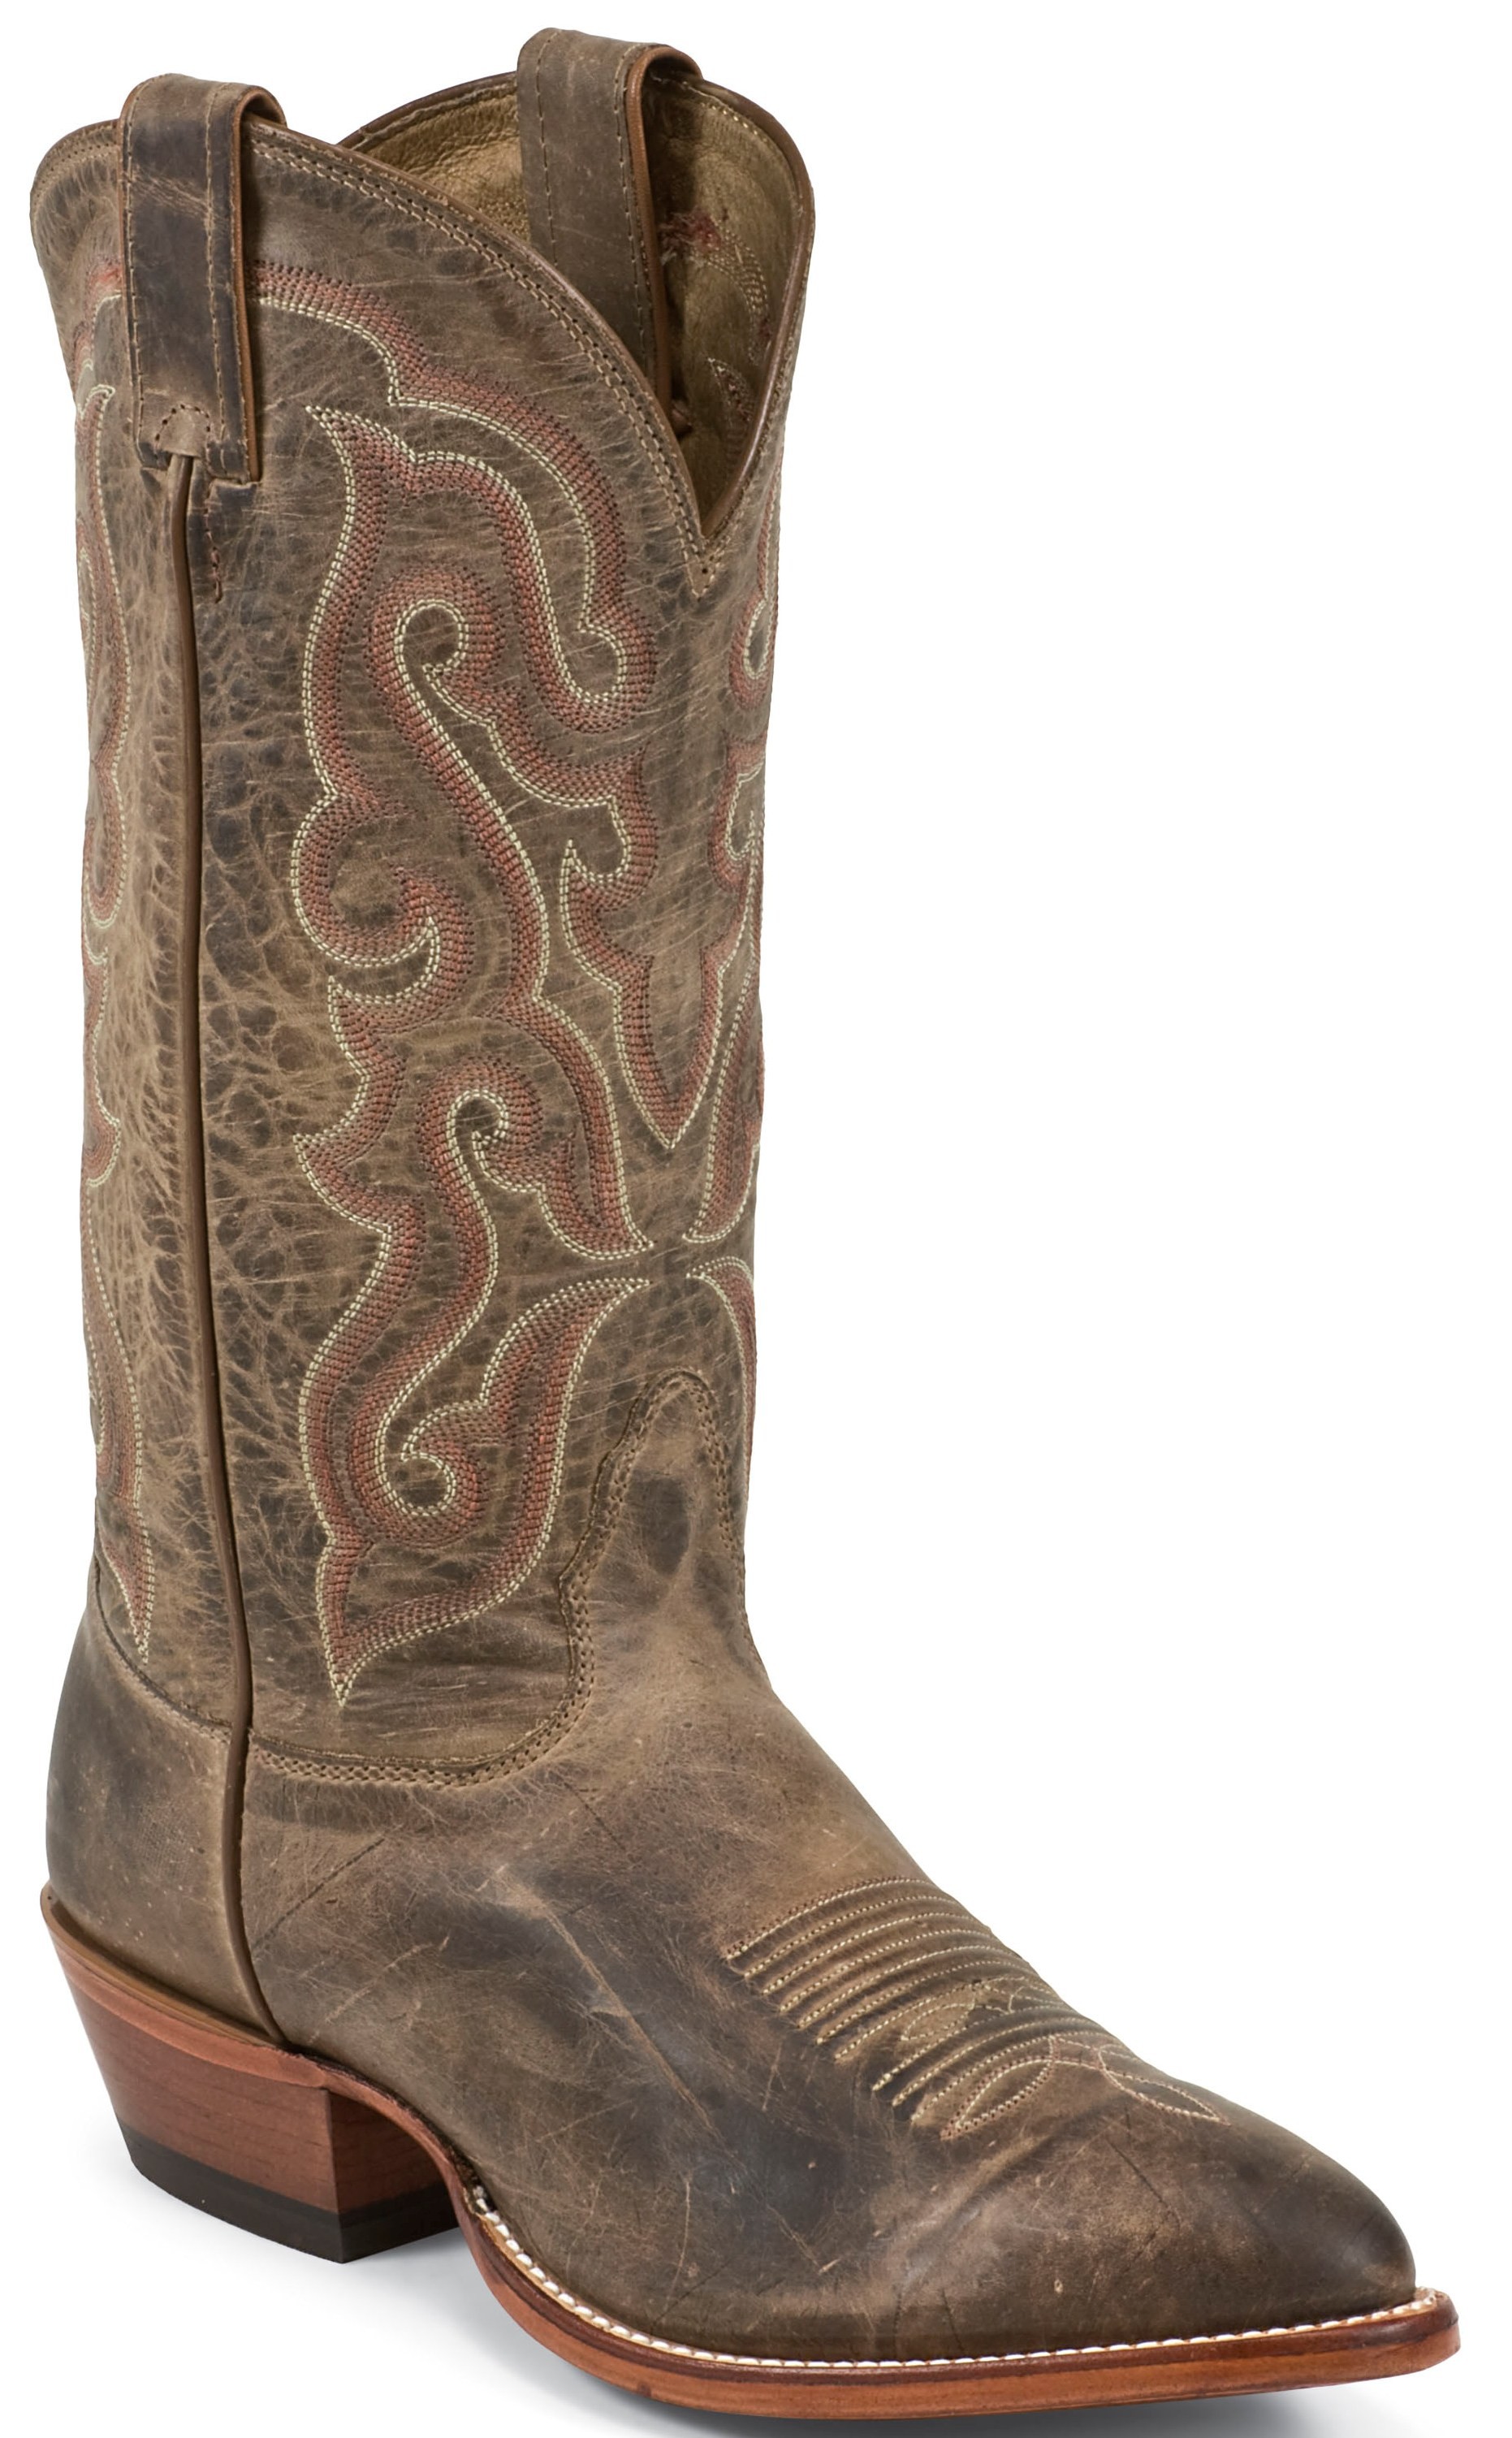 Cowboy boots photo